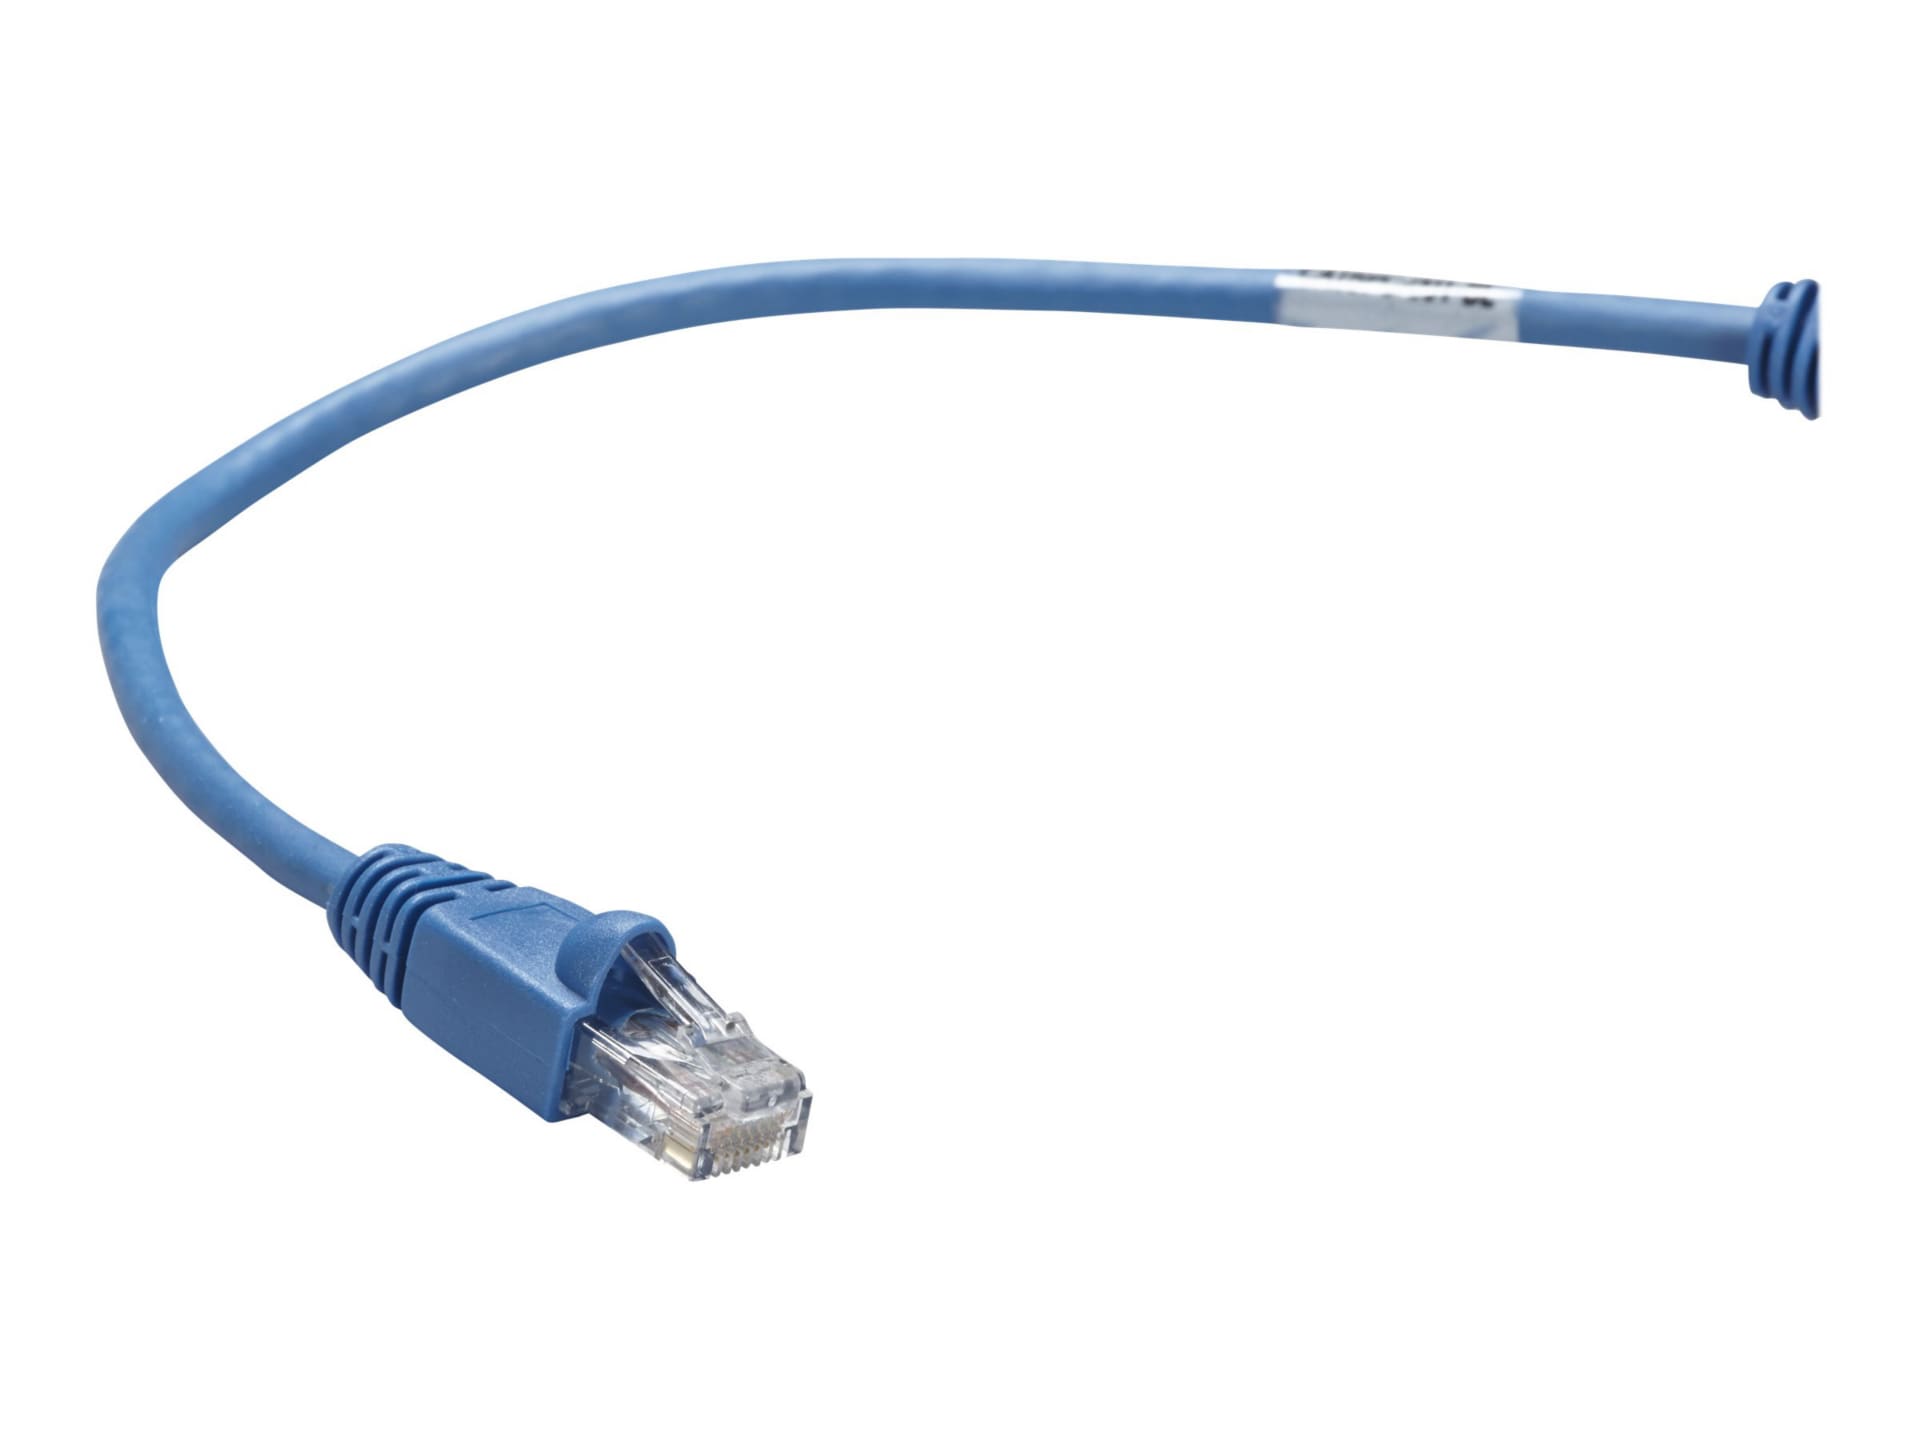 Black Box 1ft Blue CAT6 Gigabit UTP Patch Cable, 250Mhz, Snagless, 1'